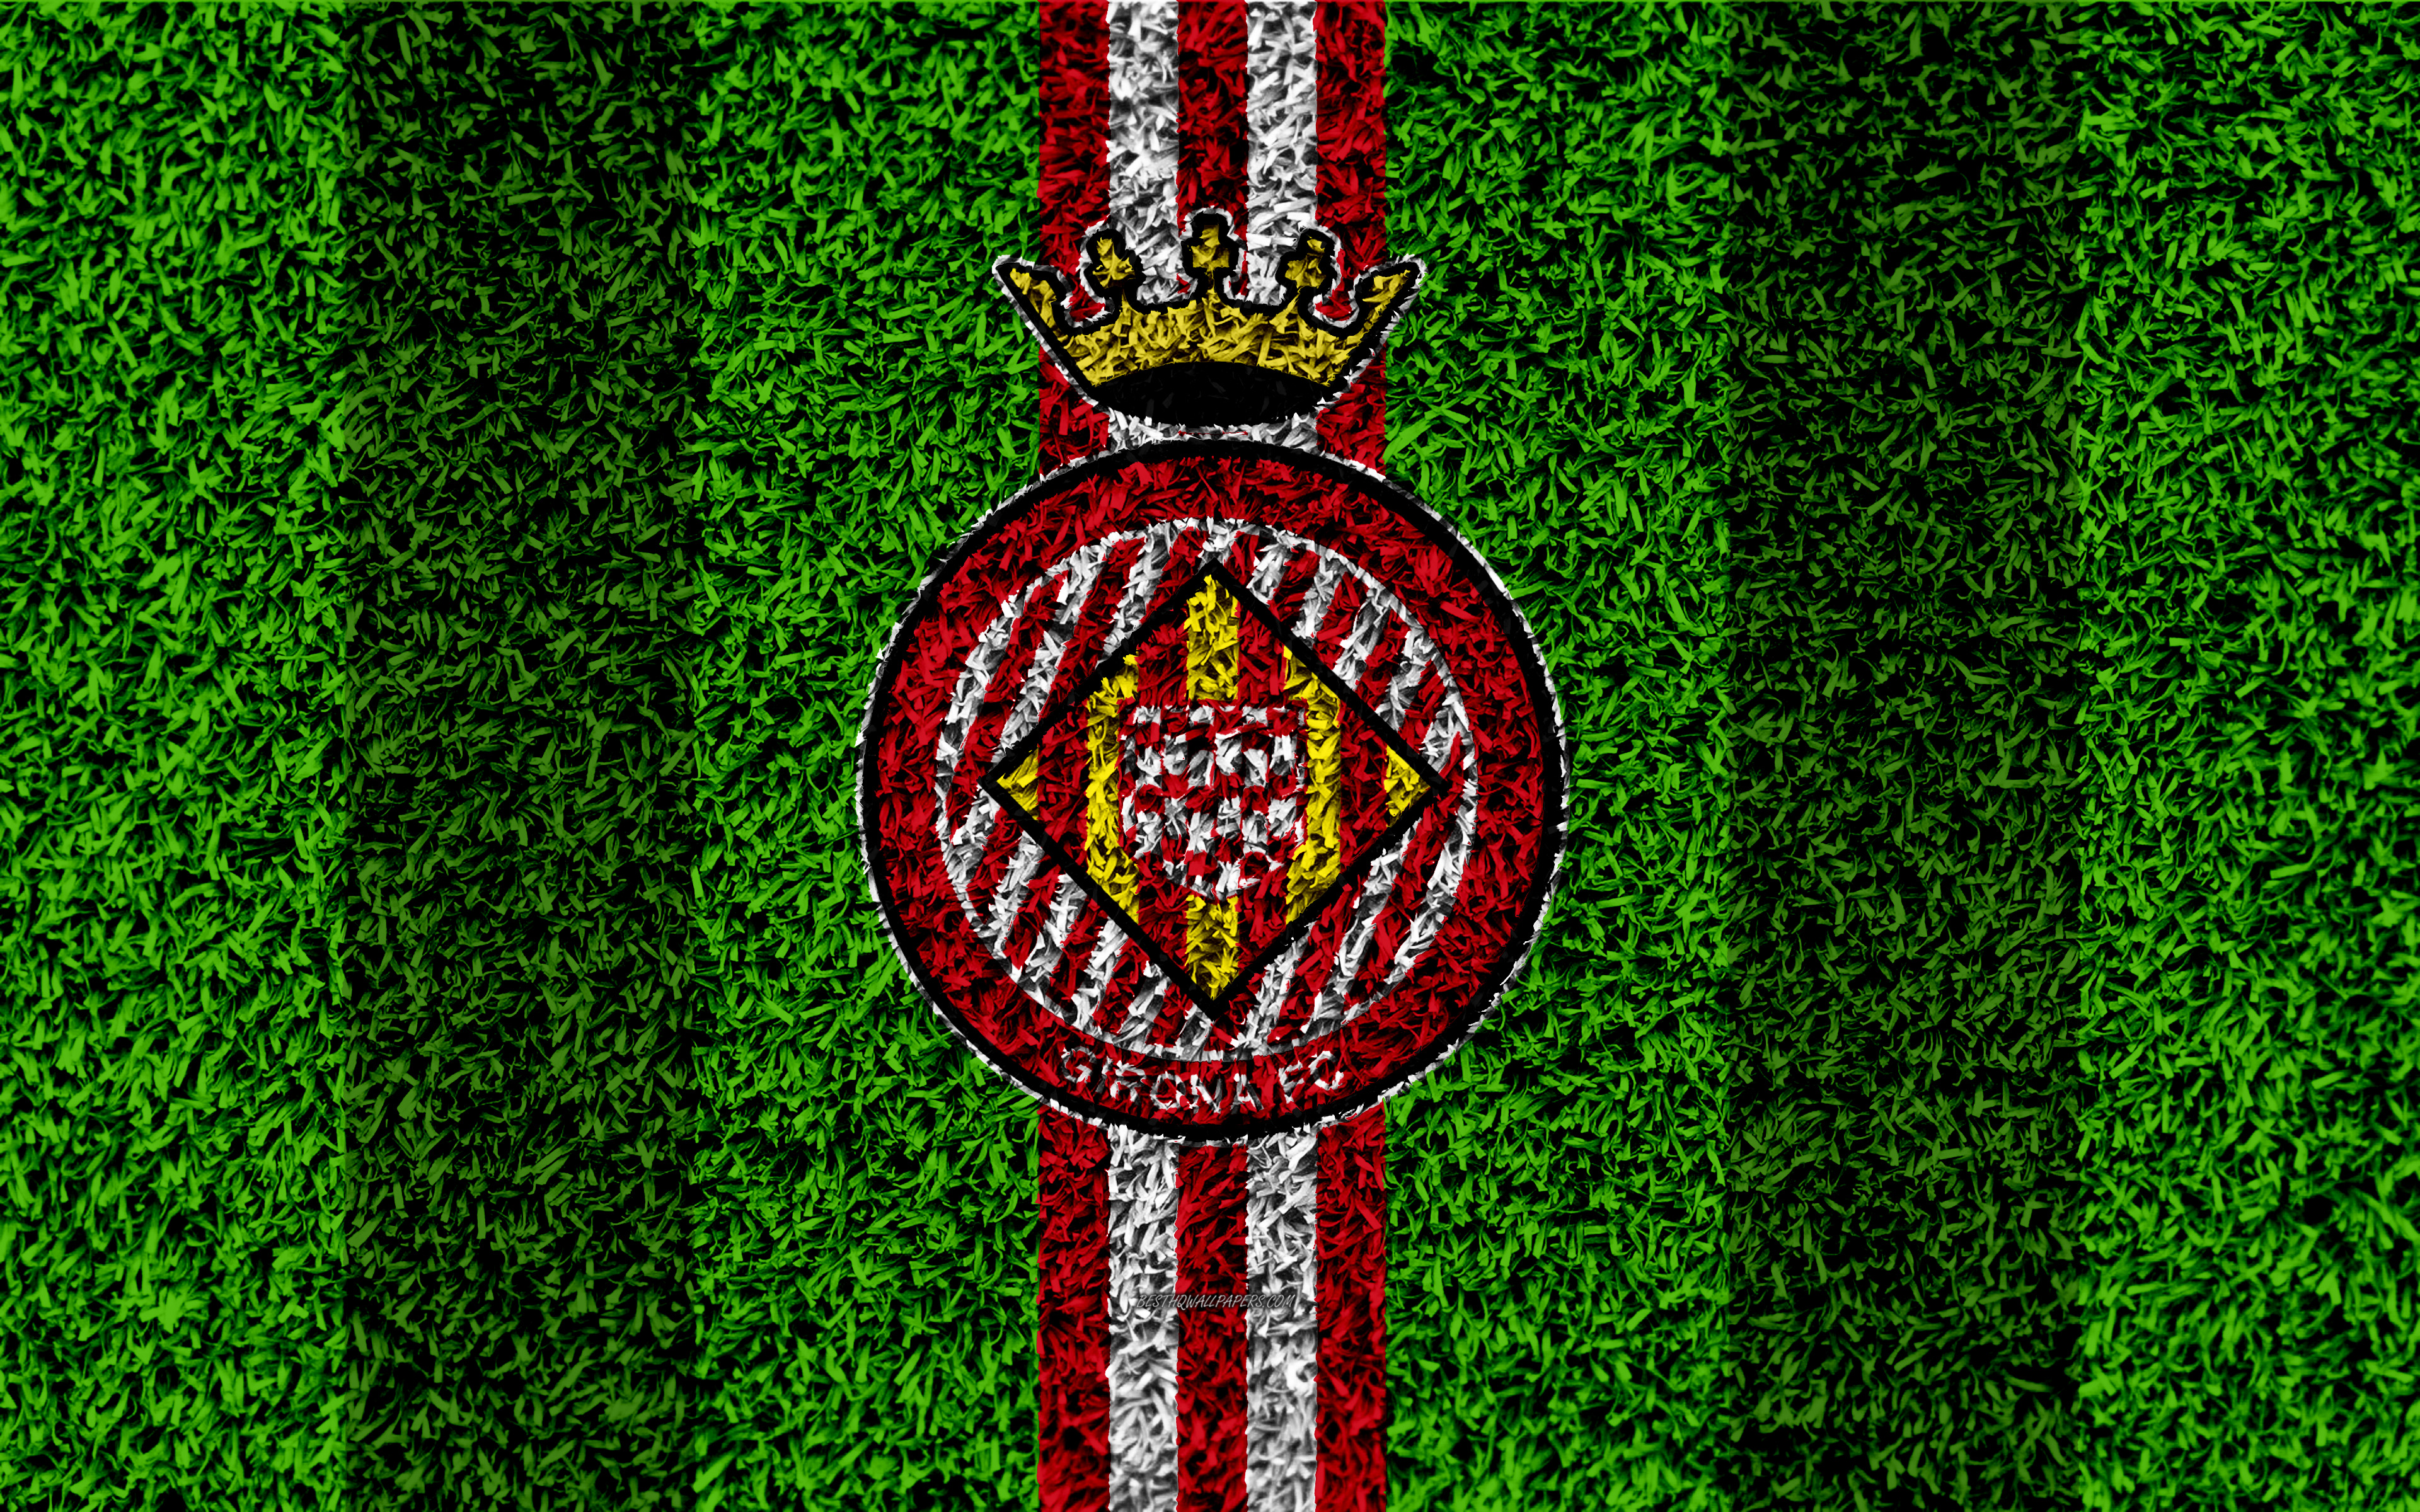 Download mobile wallpaper Sports, Logo, Emblem, Soccer, Girona Fc for free.